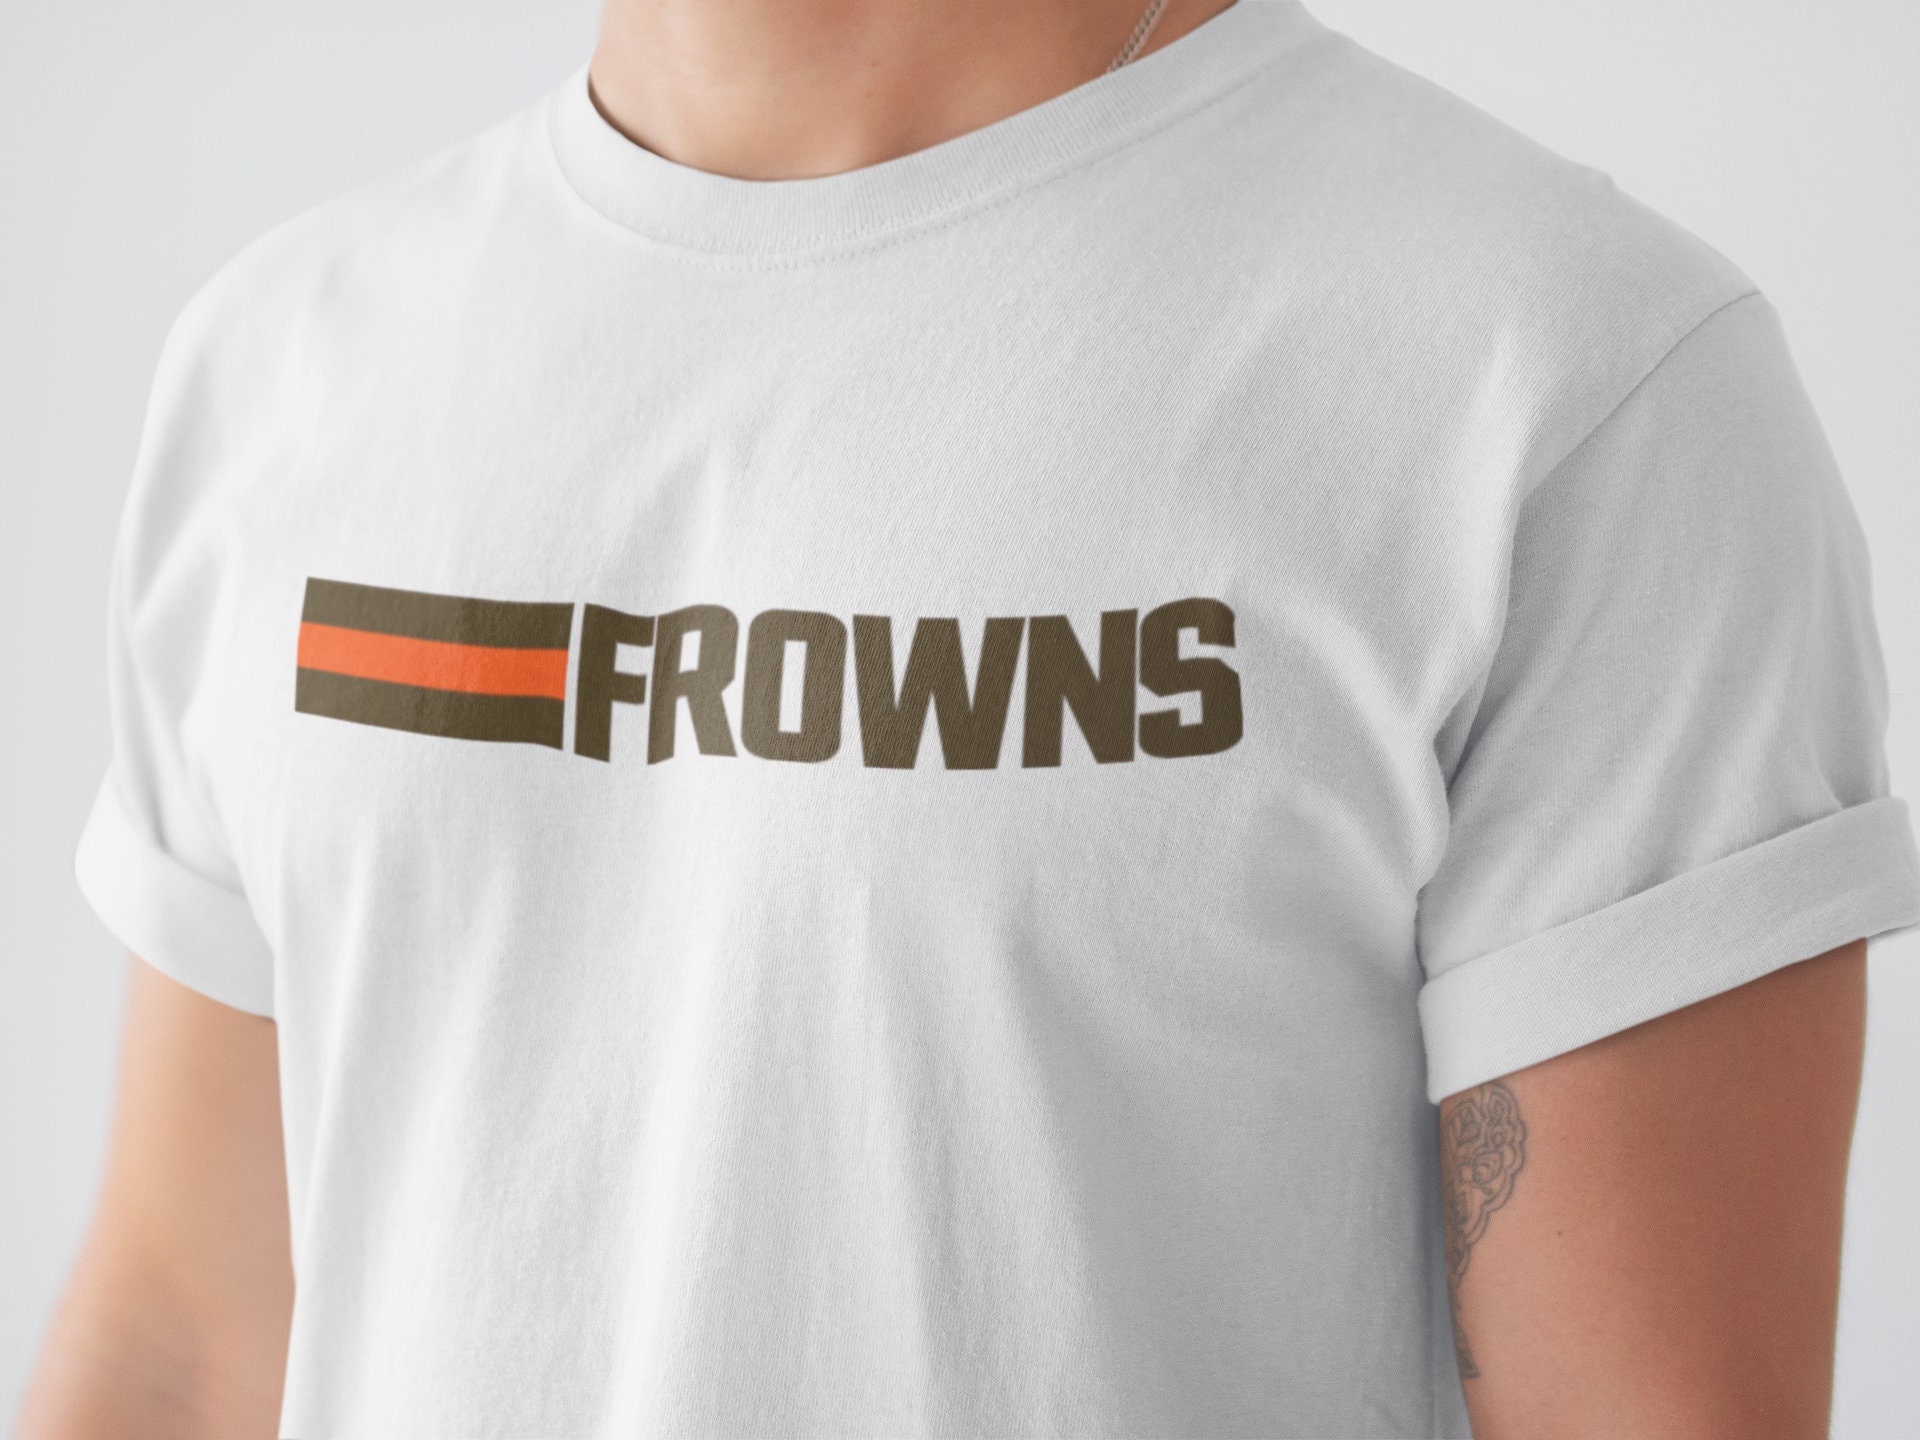 Cleveland Browns Shirt for Men Cleveland Browns Shirt for Women Browns Gifts  Funny Browns Tshirt Browns Shirt for Dad Browns Game Day 